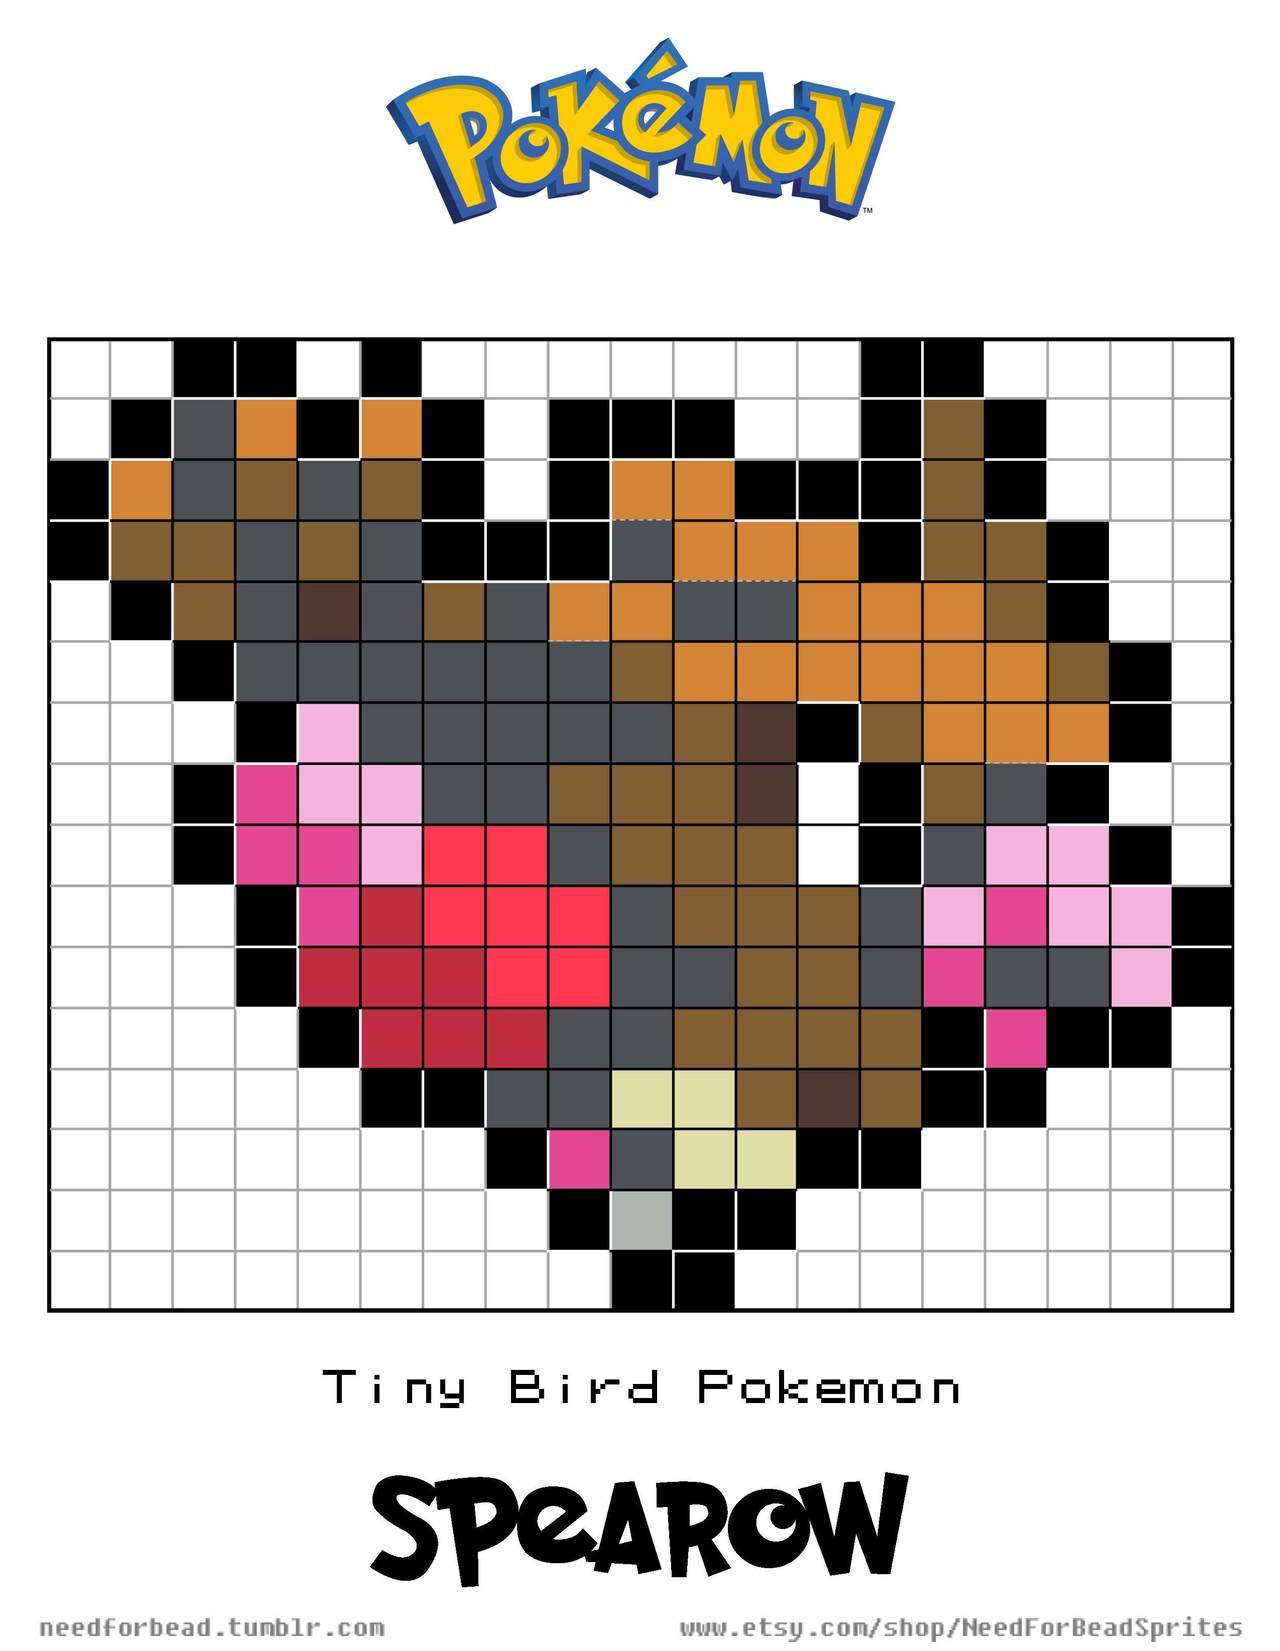 Pokemon: Spearow #021 The Tiny Bird Pokemon... - Need for Bead